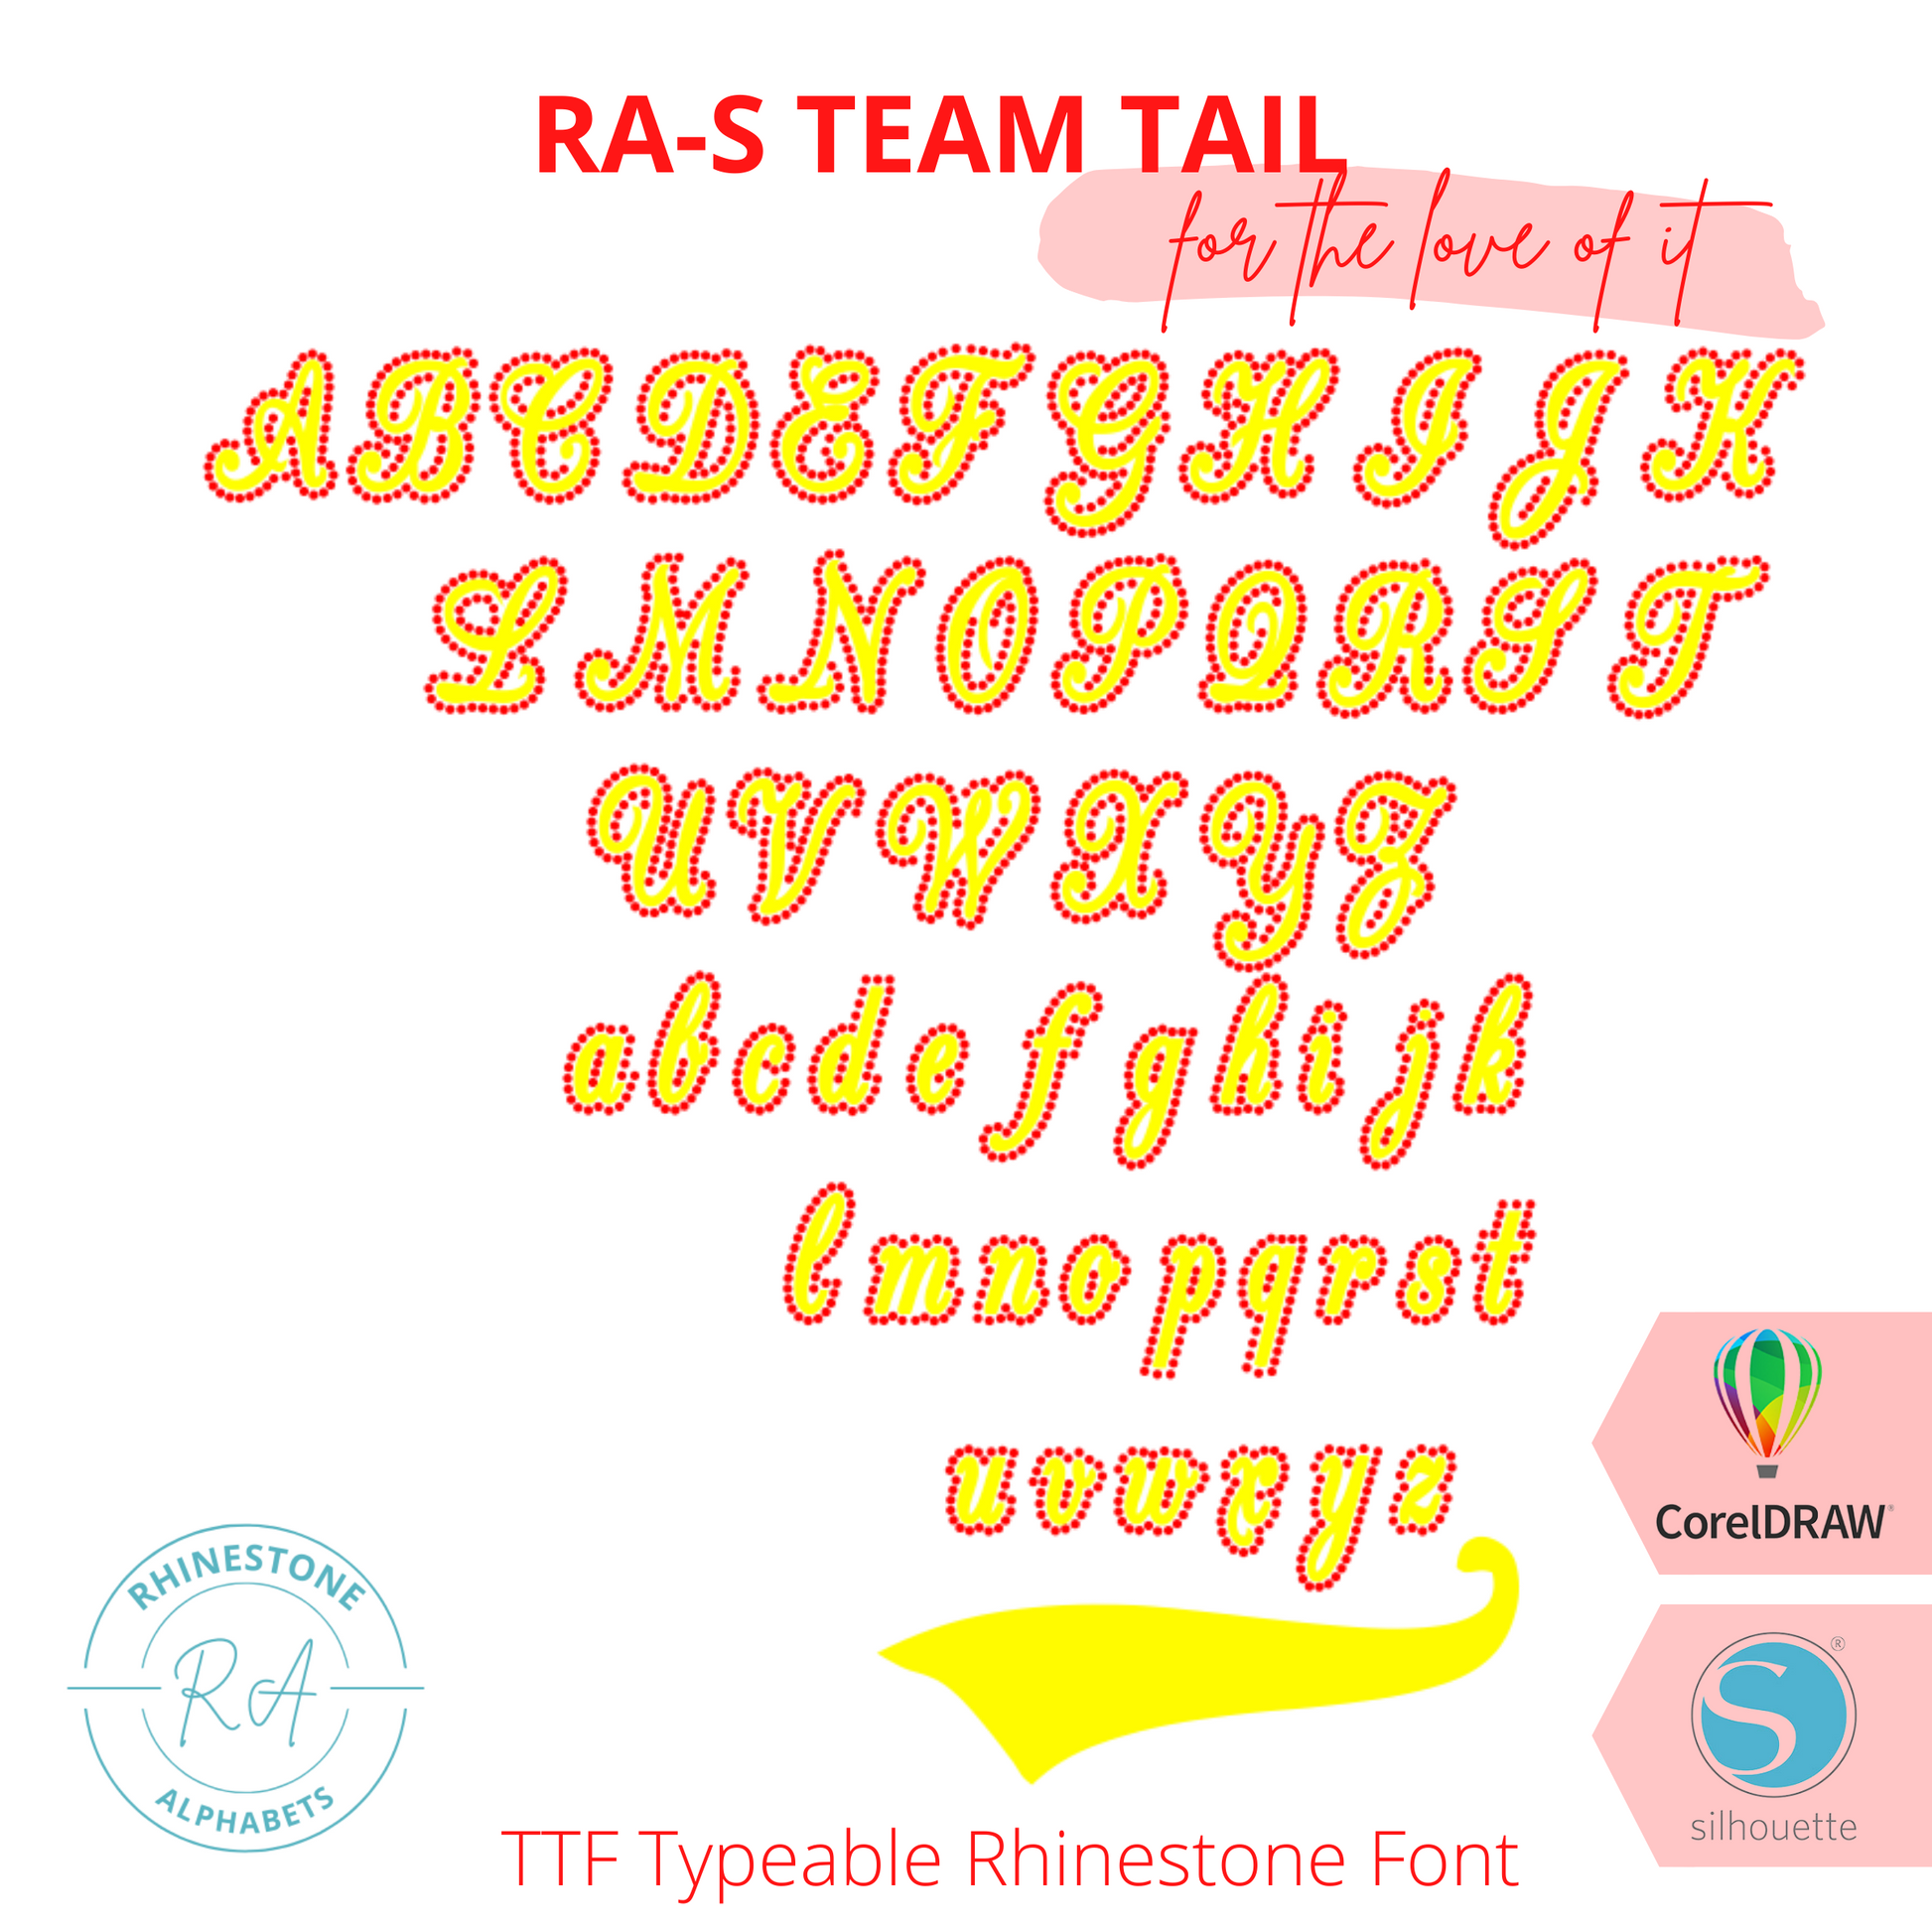 RA-S Team Tail - RhinestoneAlphabets